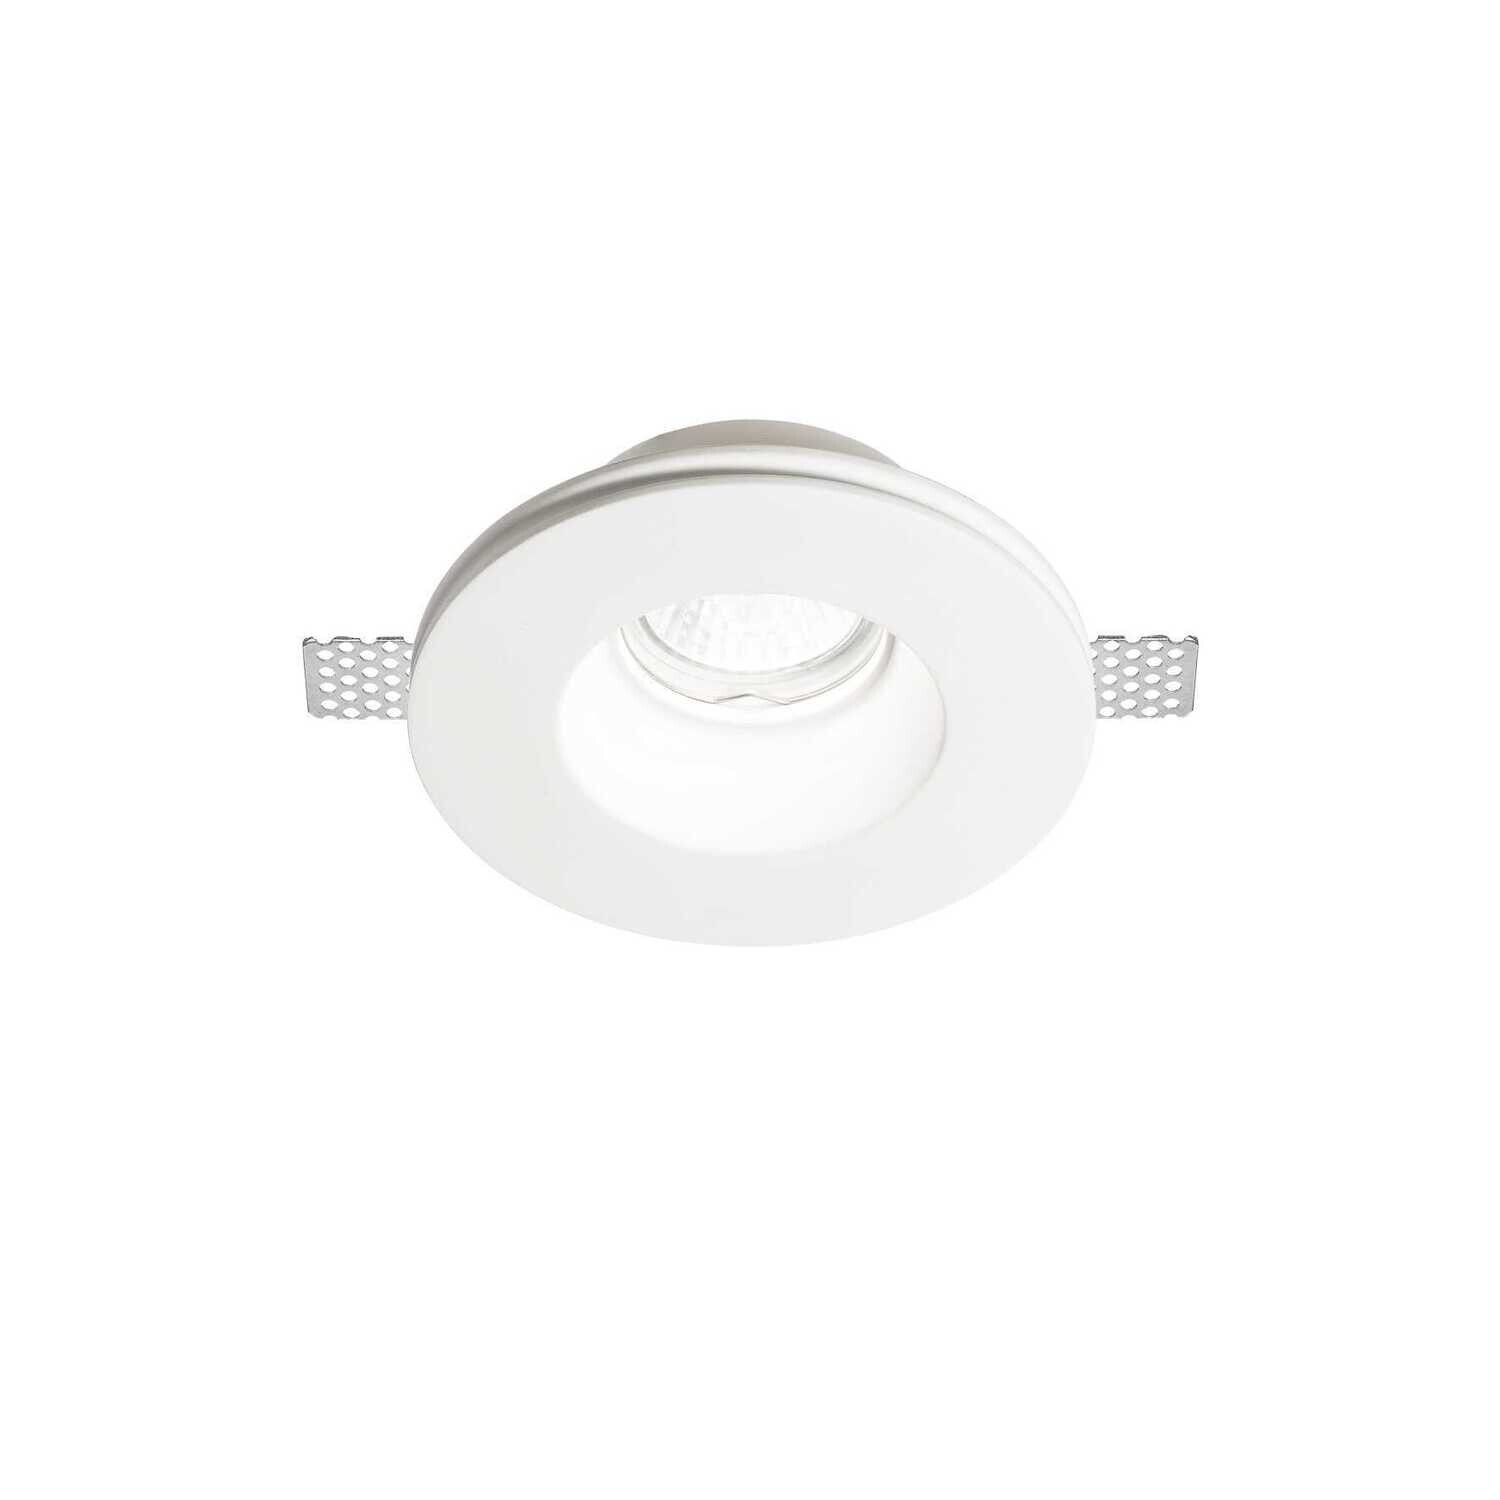 SAMBA round Ø74 recessed trimless Plaster Spot light for GU10